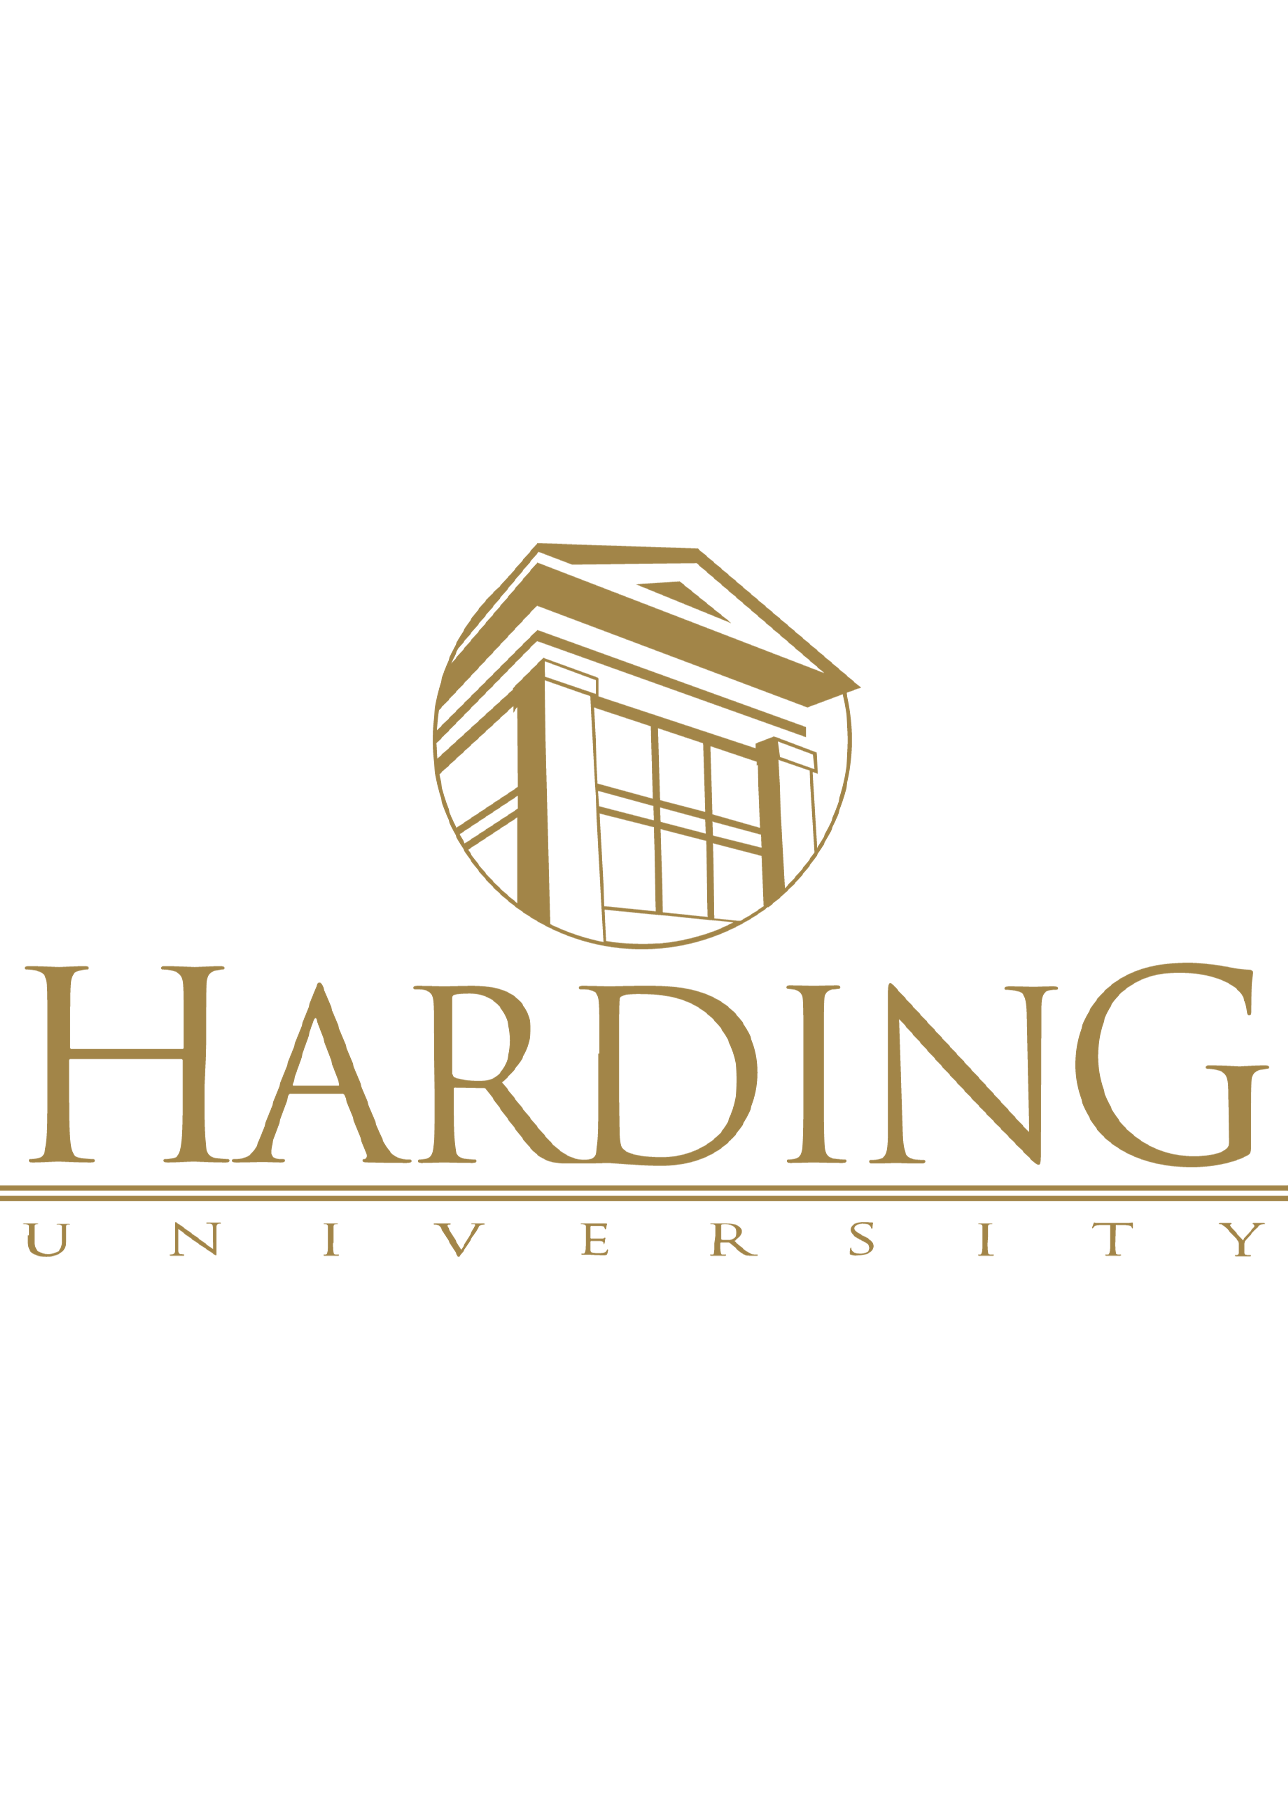 Harding School of Theology